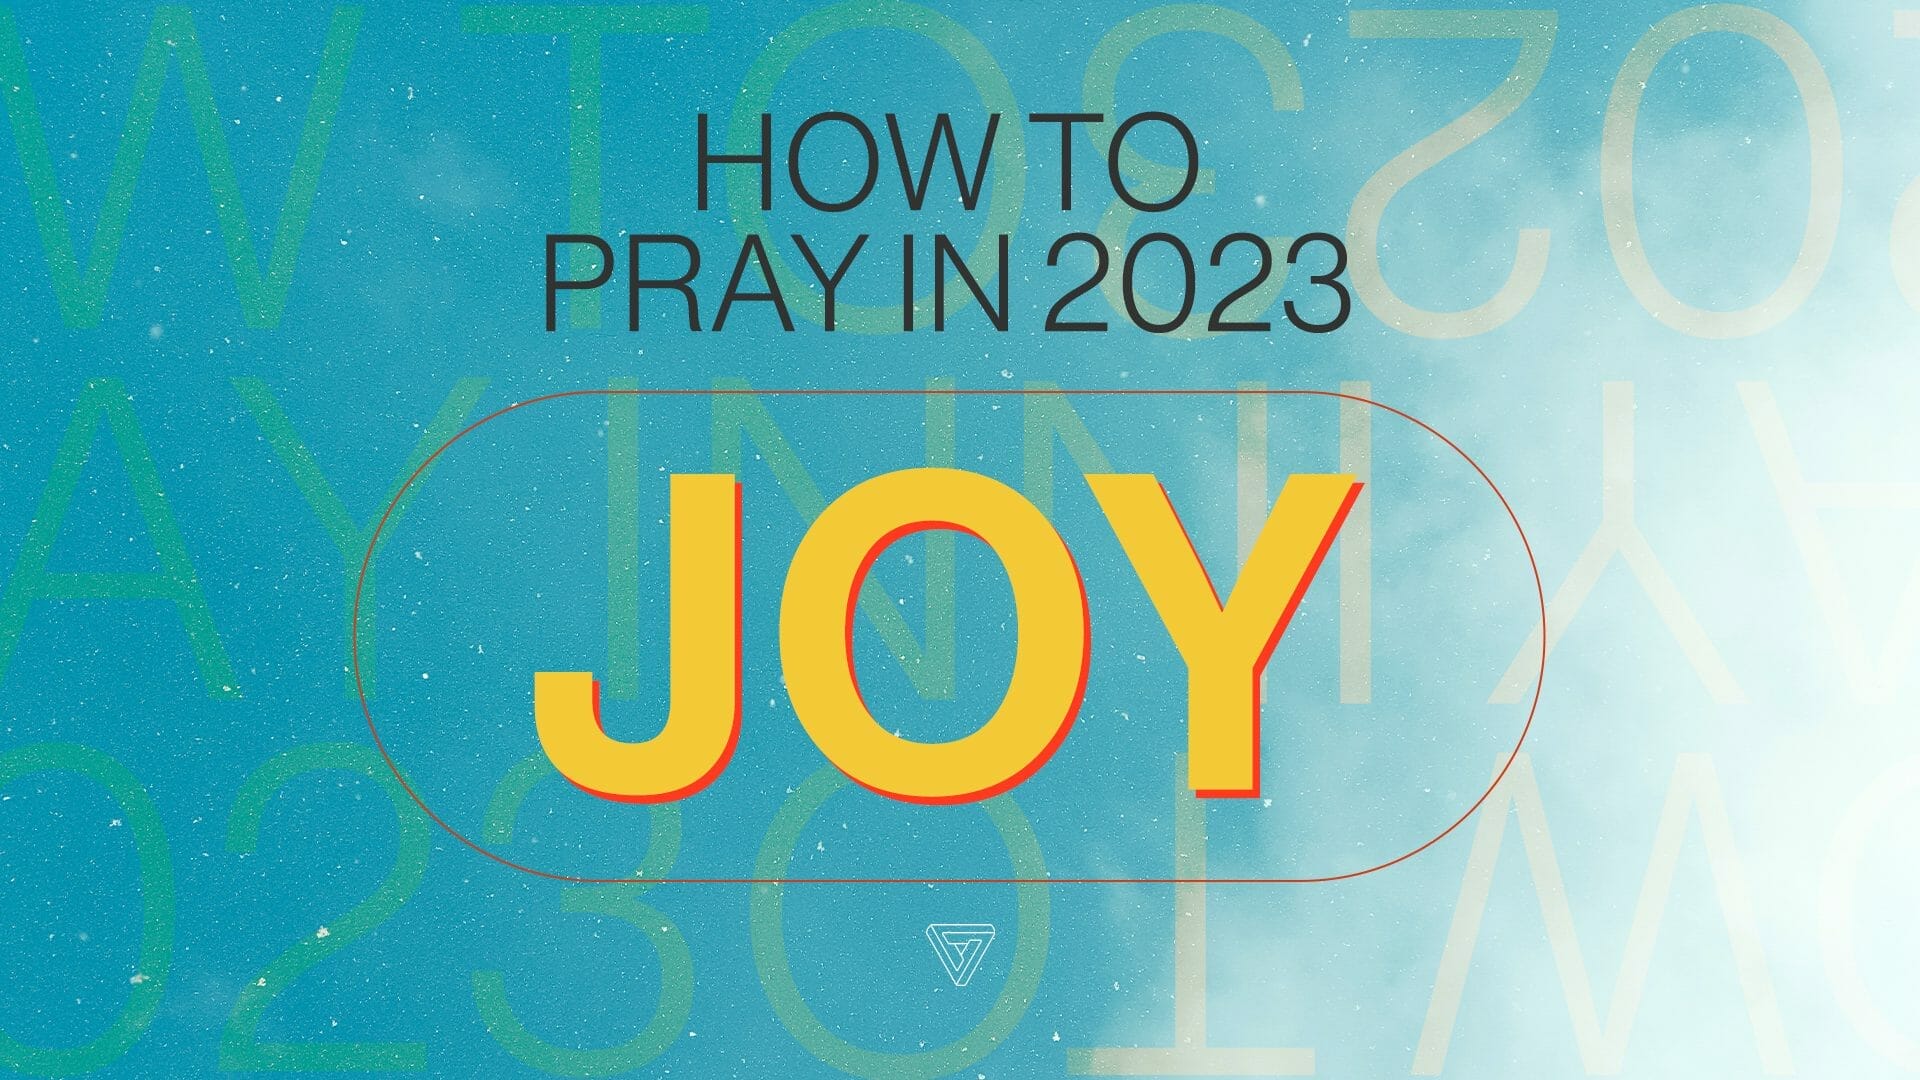 Joy Prayer Structure